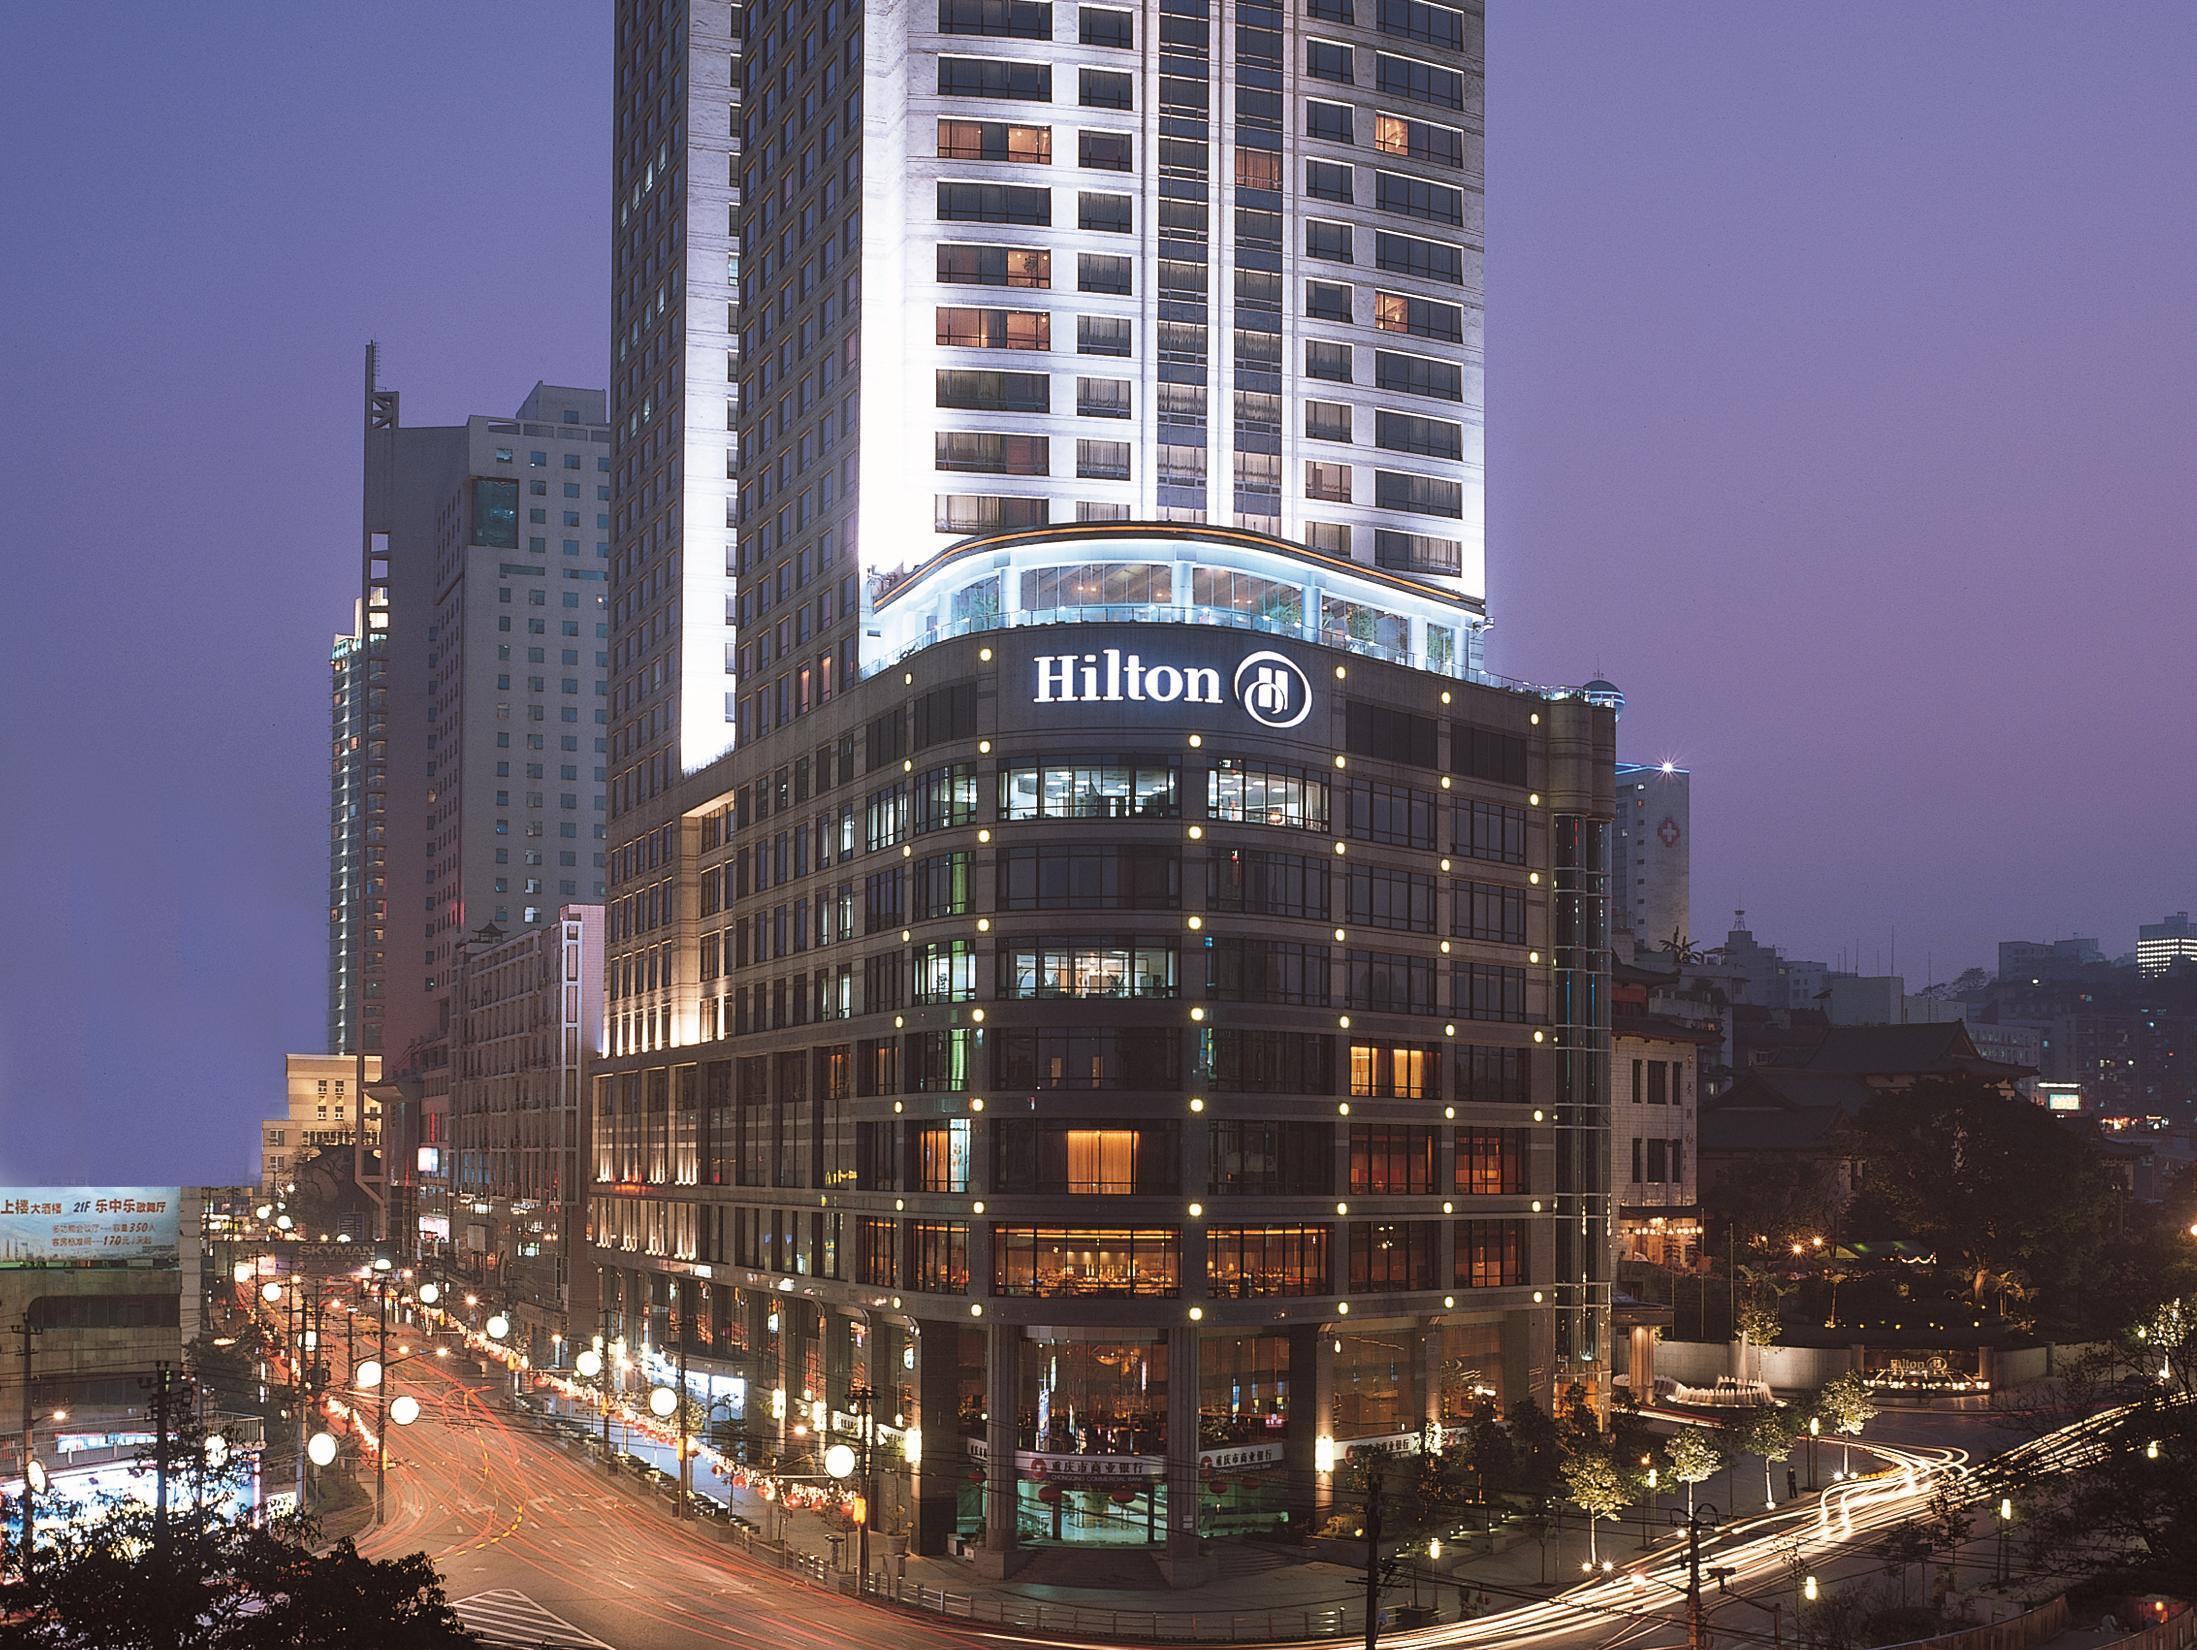 The Hilton Chongqing Hotel intro 2016